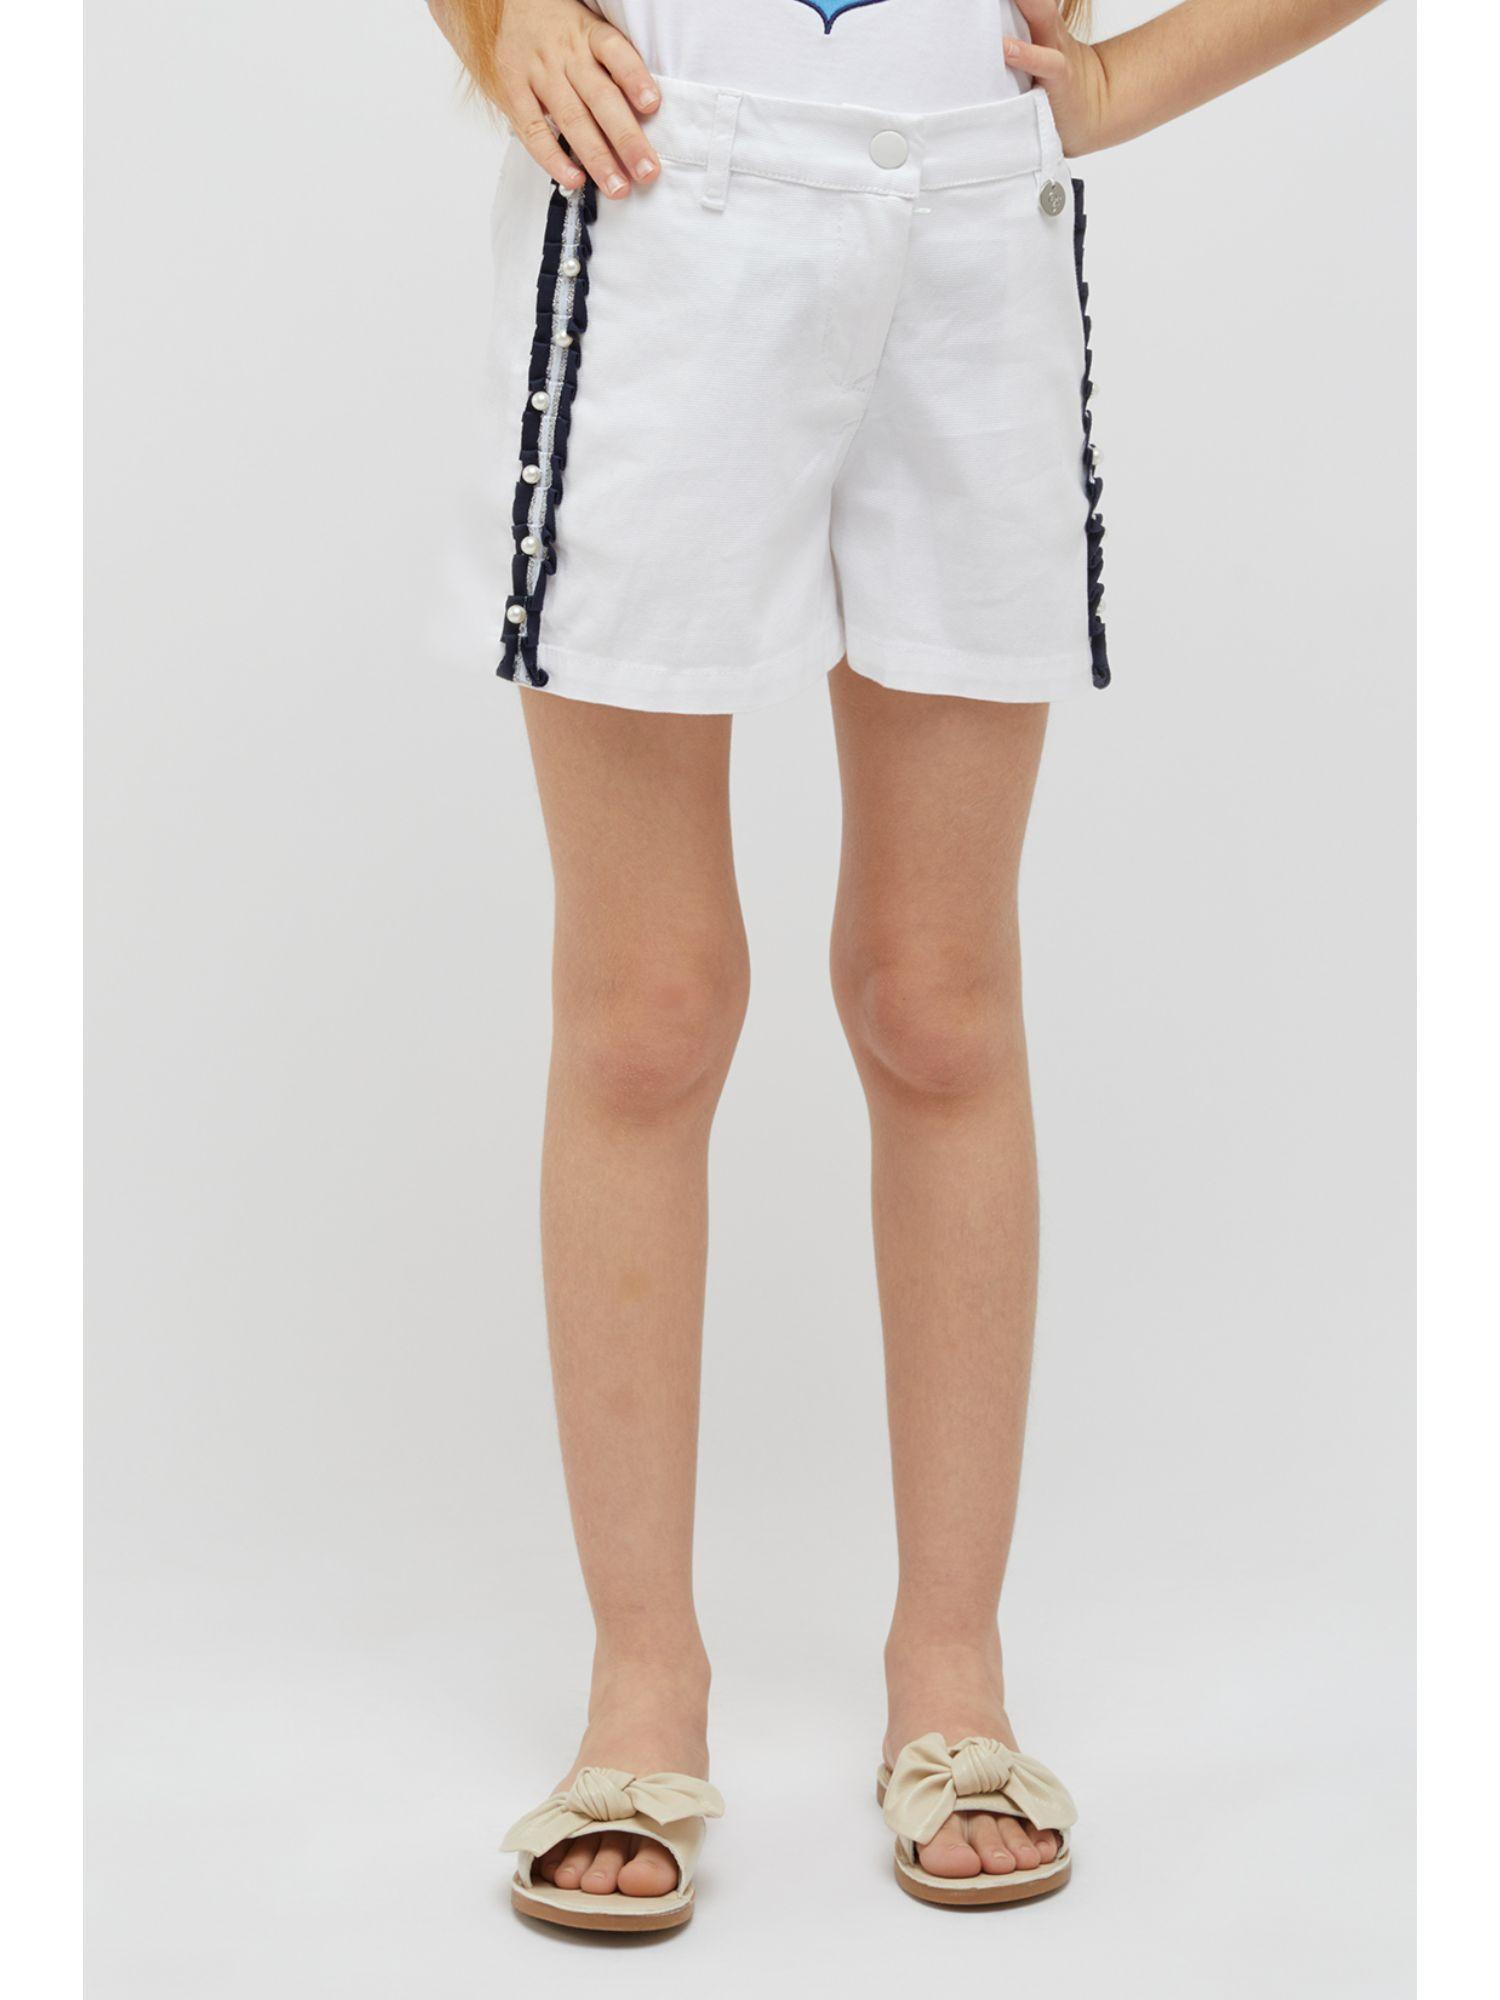 white-patterned-shorts